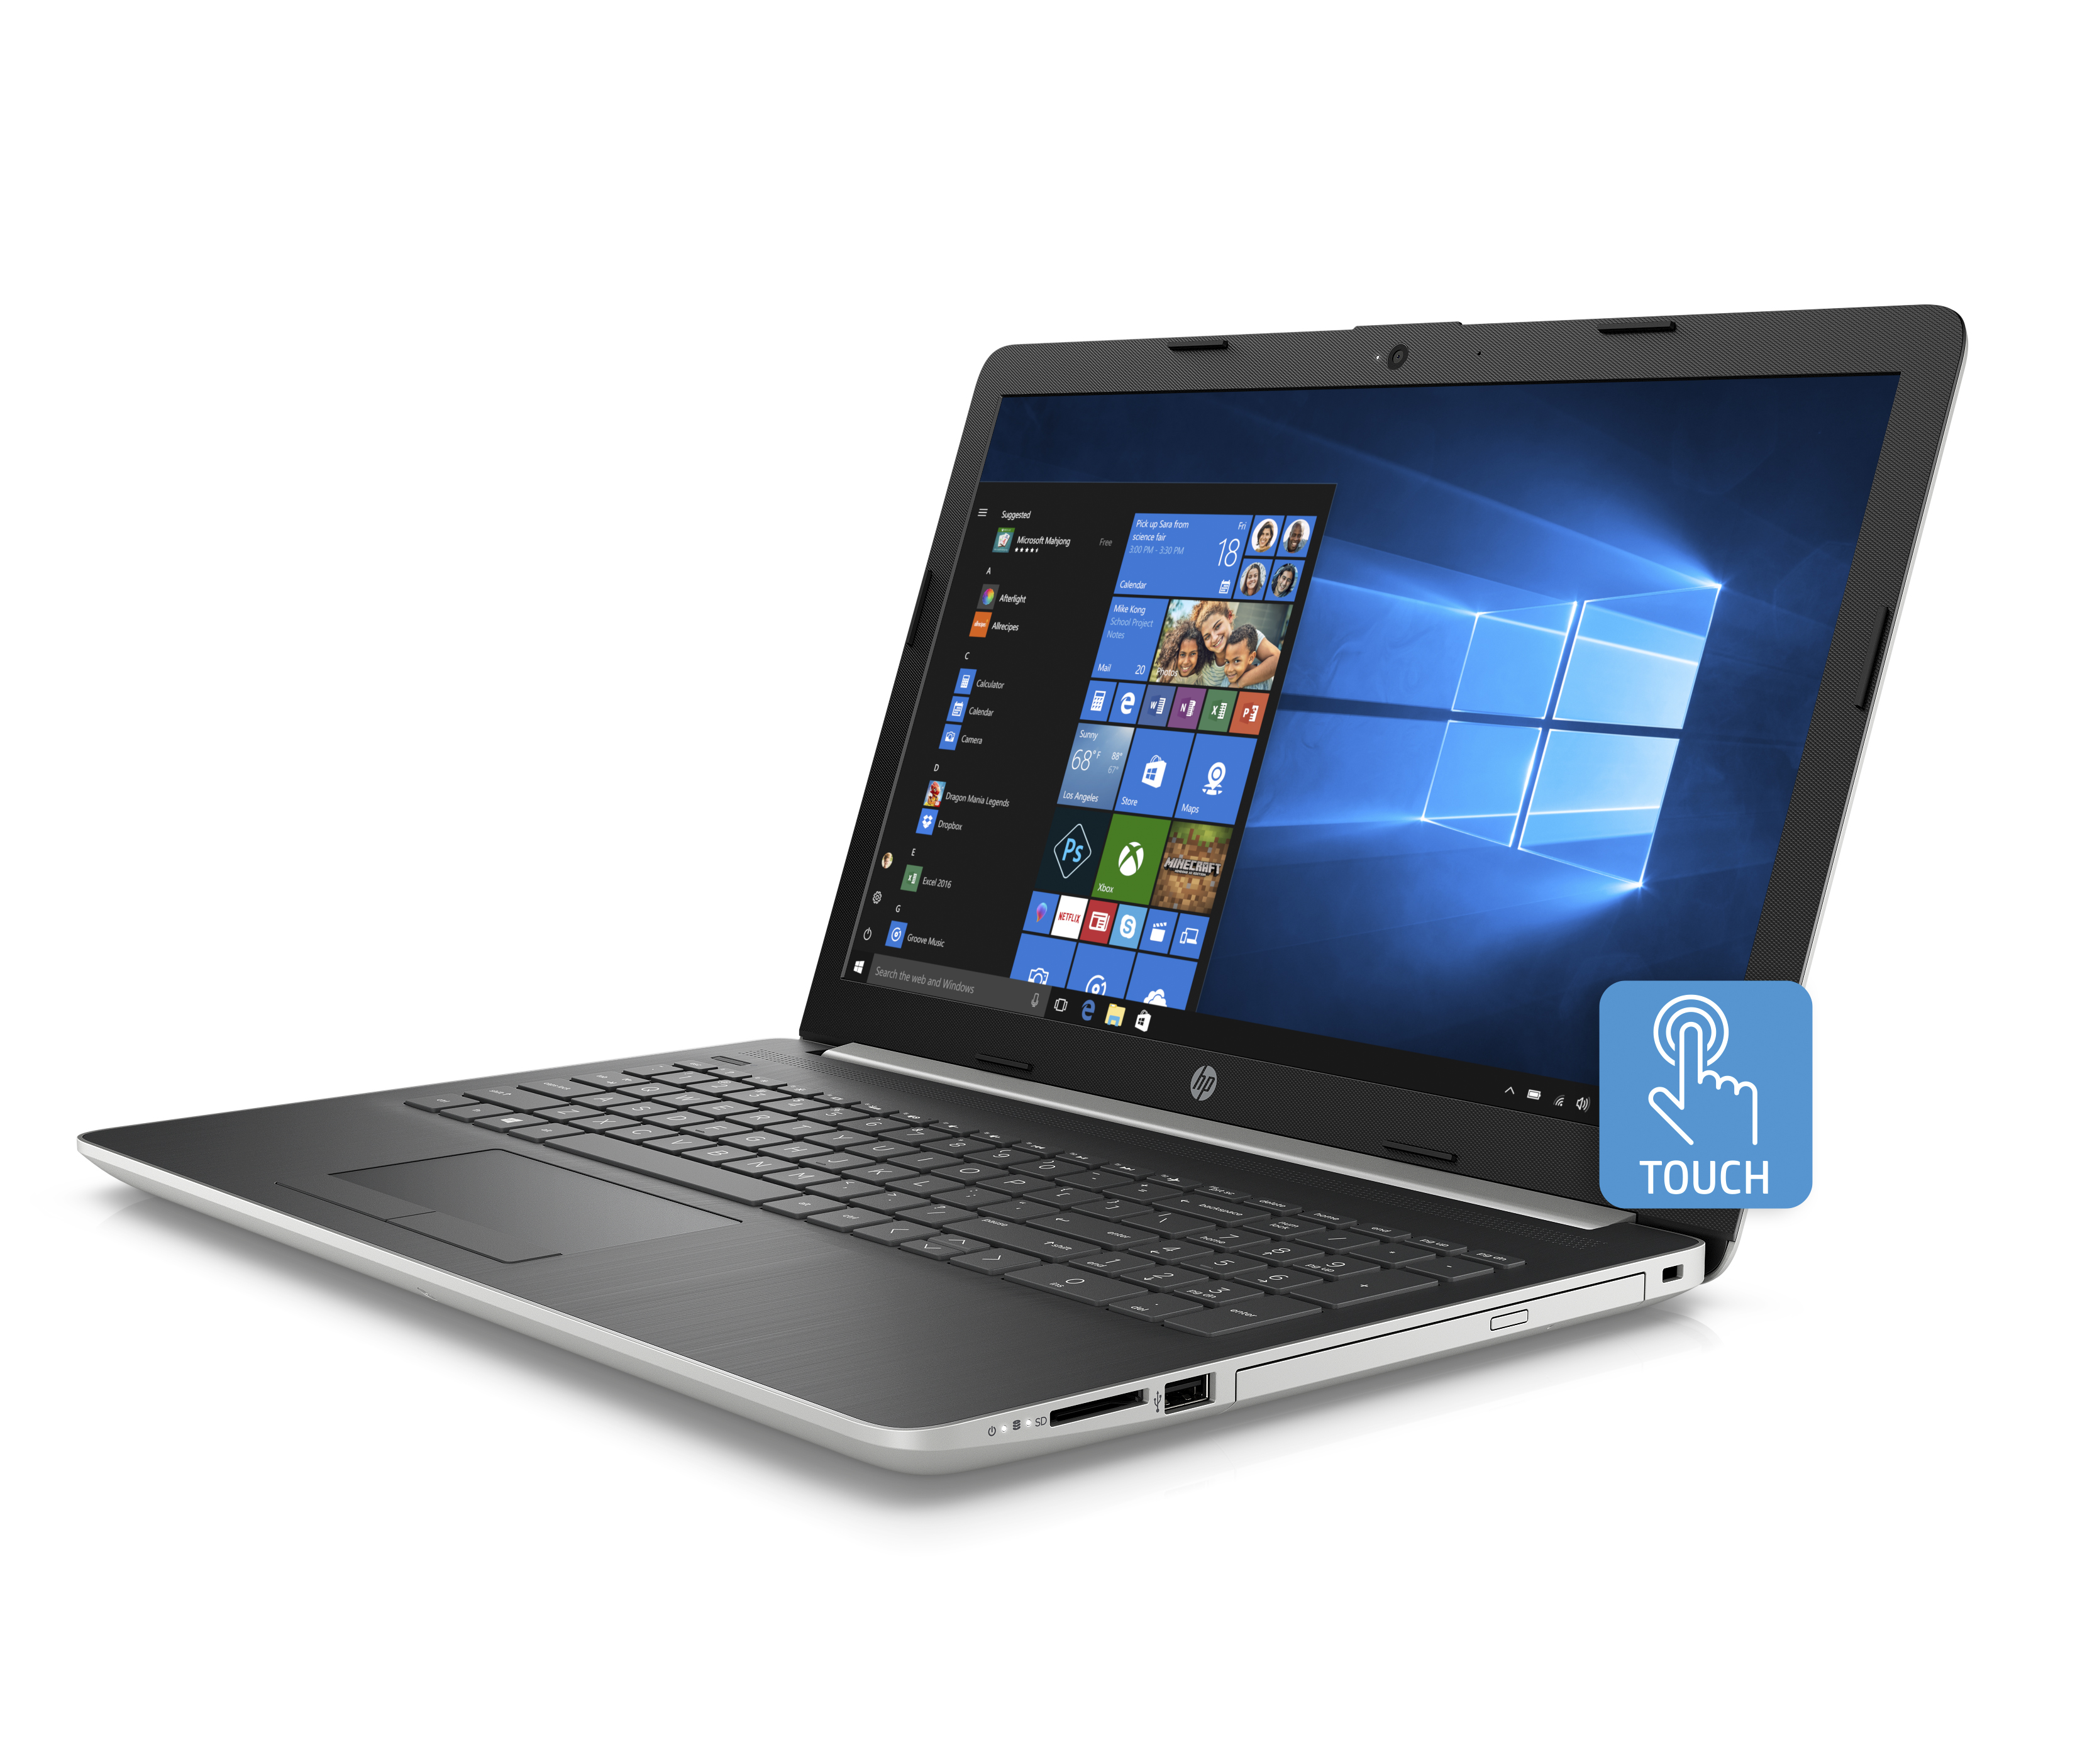 HP 15 Graphite Mist Laptop Touchscreen, Intel Core i5-8250U, 1TB HDD + 16GB Intel Optane memory, 4GB SDRAM, DVD, 15-da0053wm - image 3 of 9